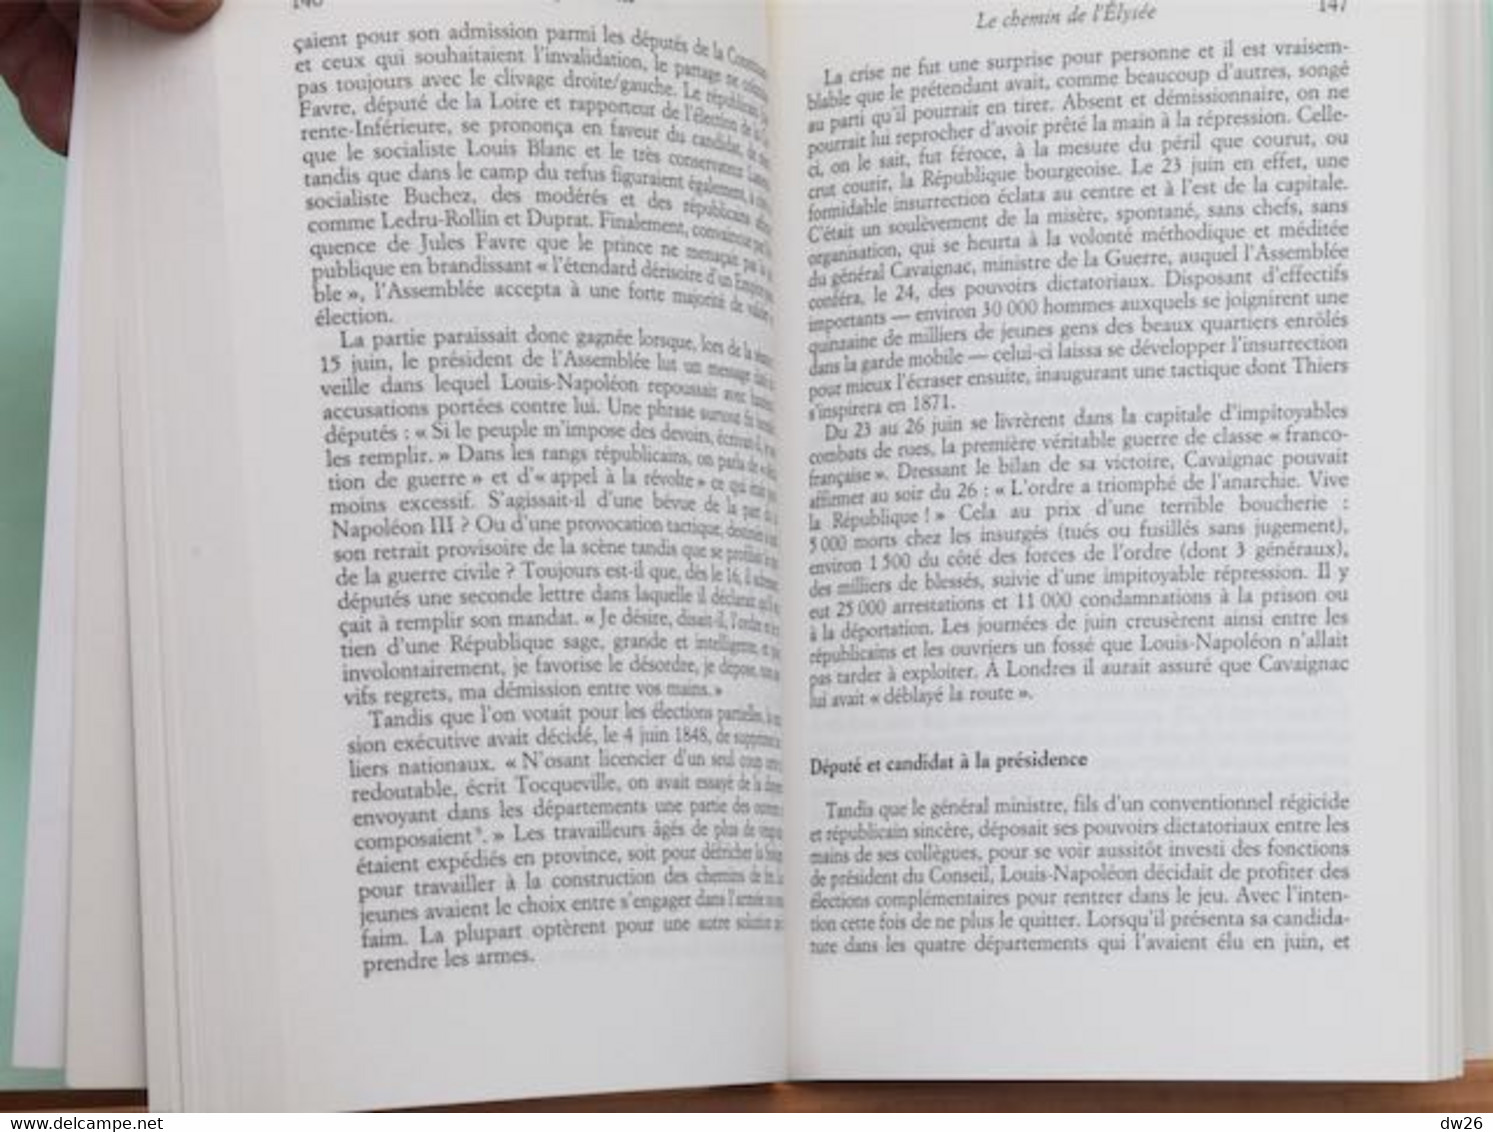 Histoire, XIXe Siècle - Napoléon III Par Pierre Milza - Edition Perrin 2004 - Histoire